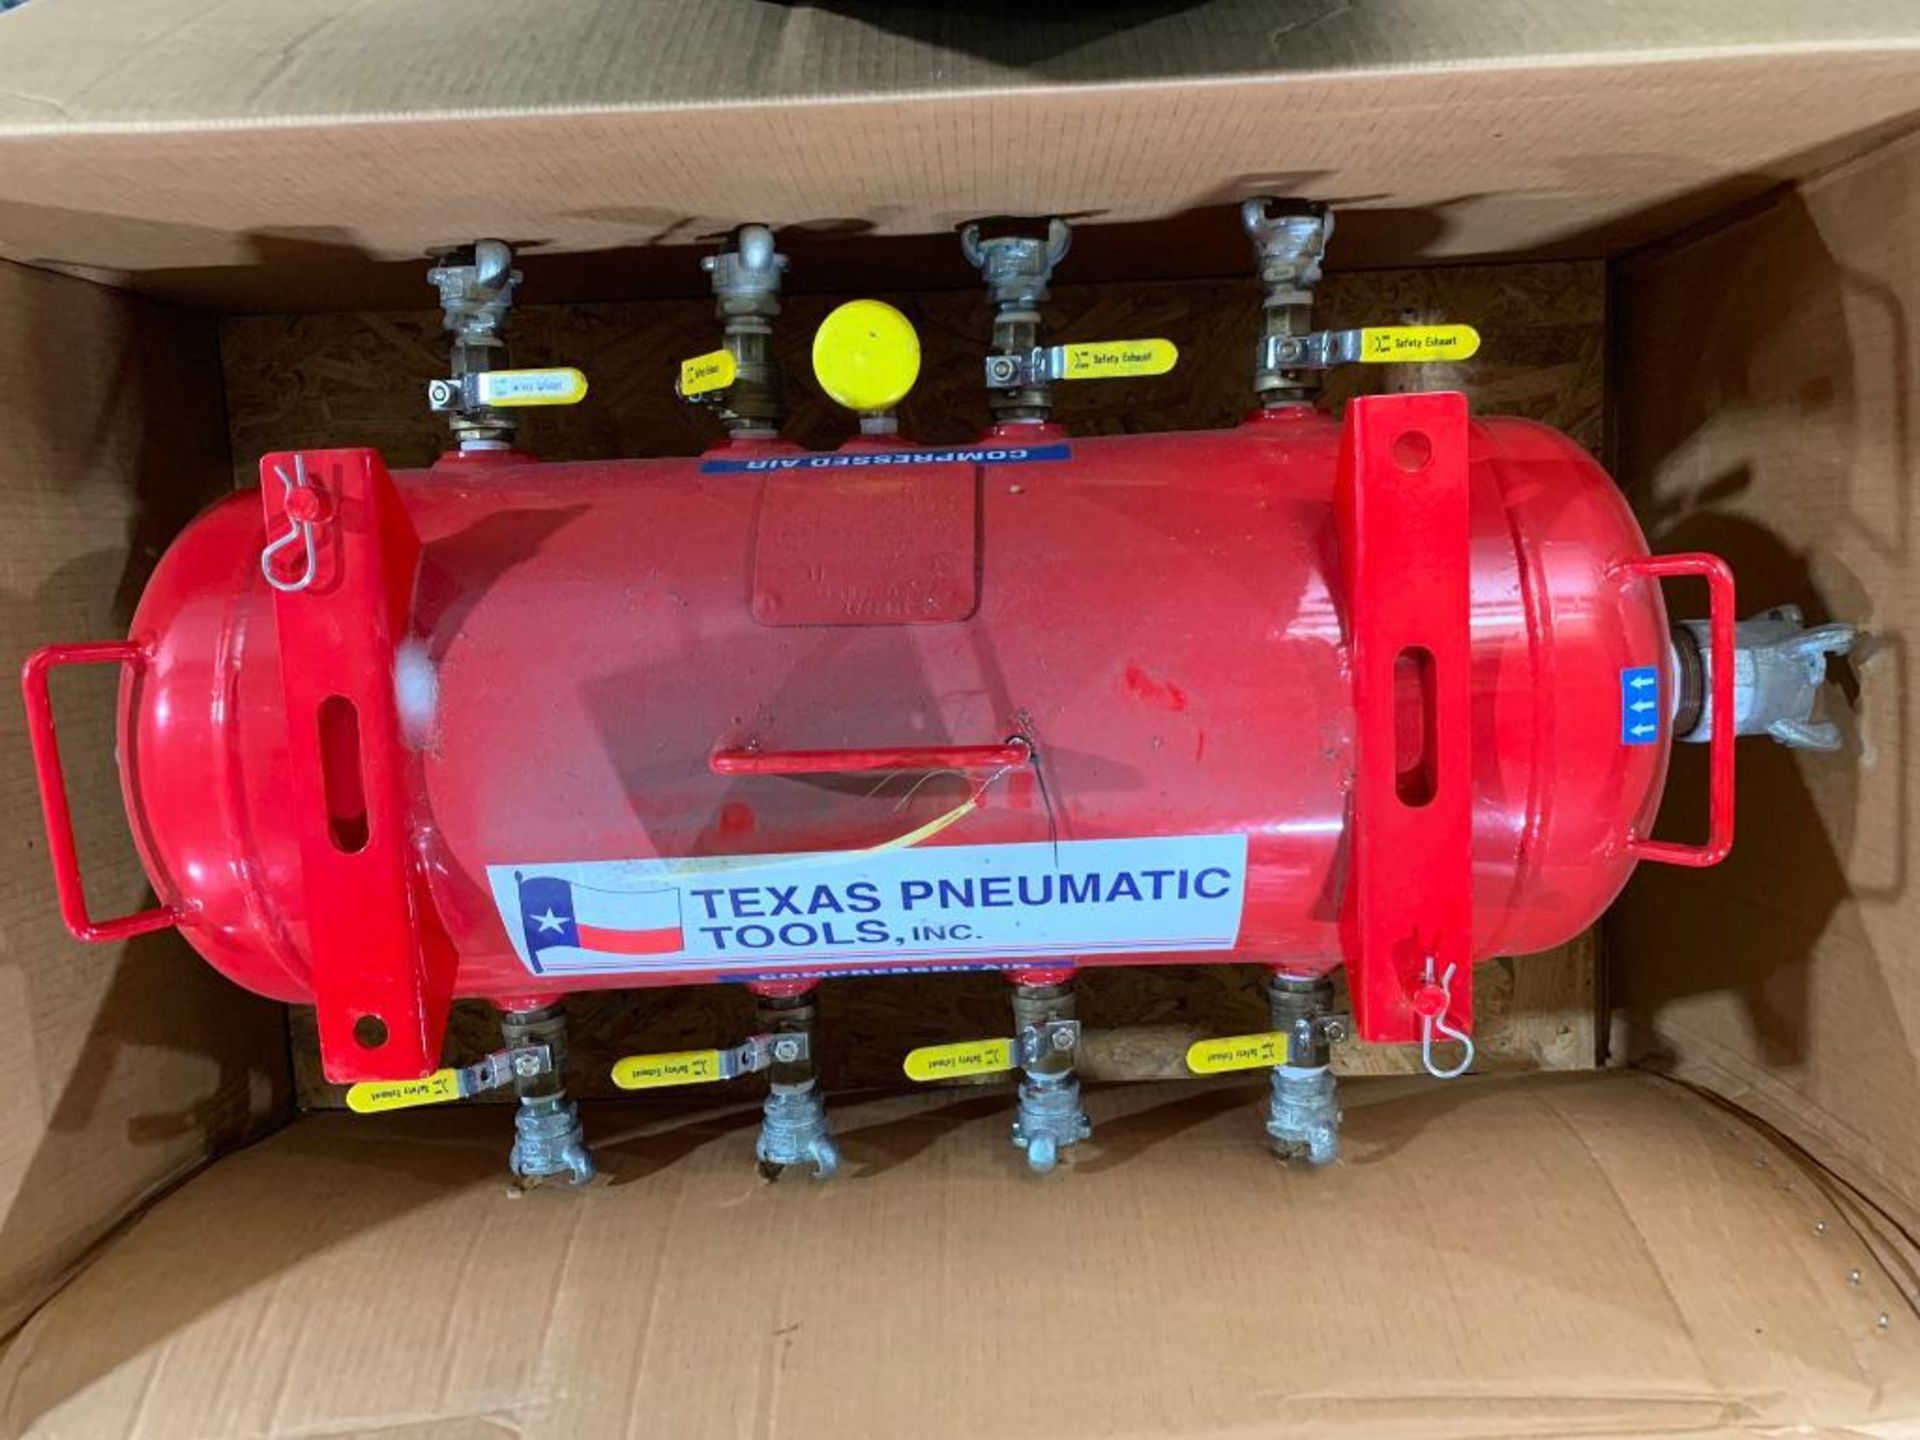 Texas Pneumatic 15-Gallon Air Manifold, Model TX-2AMF, (8) 3/4" Outlets, 200 PSI